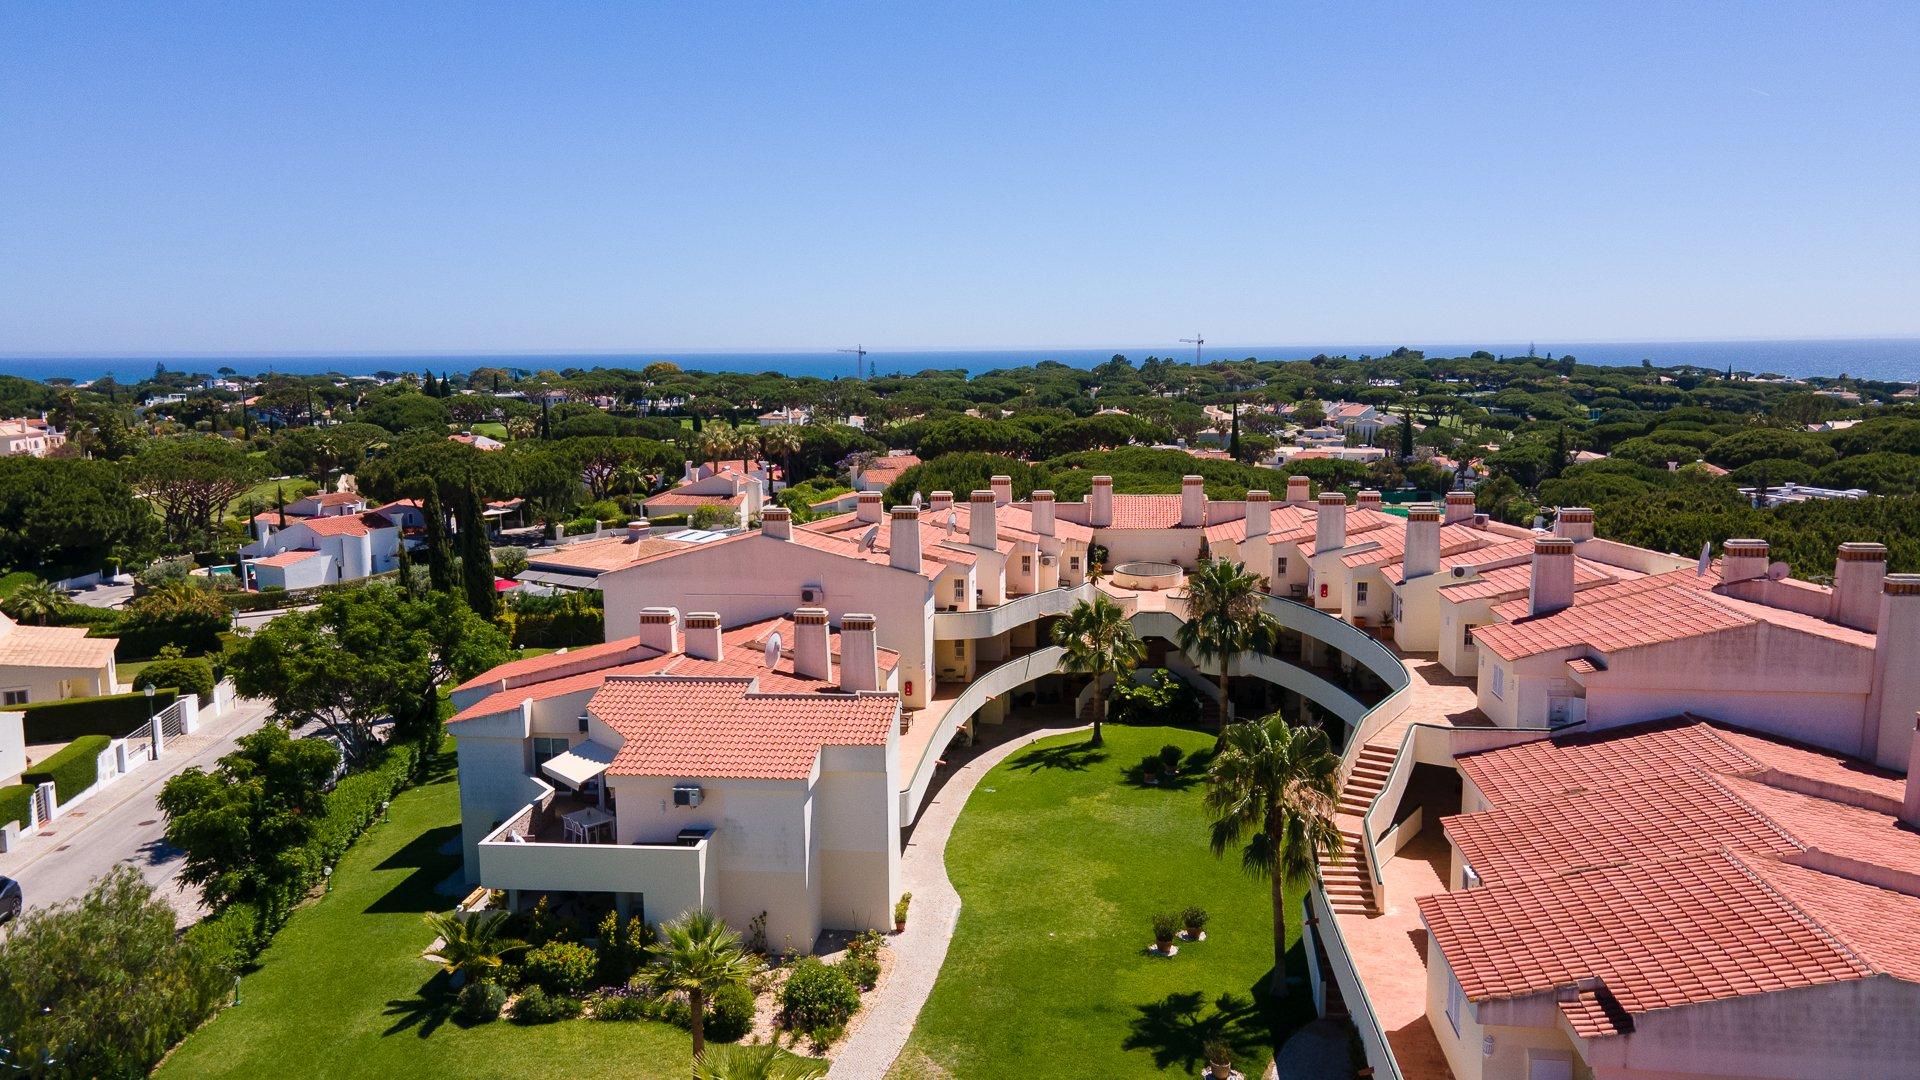 Apartmento Japonica - Jardins do Golfe, Vale do Lobo, Algarve - Jardins_de_Golf_Air-19.jpg